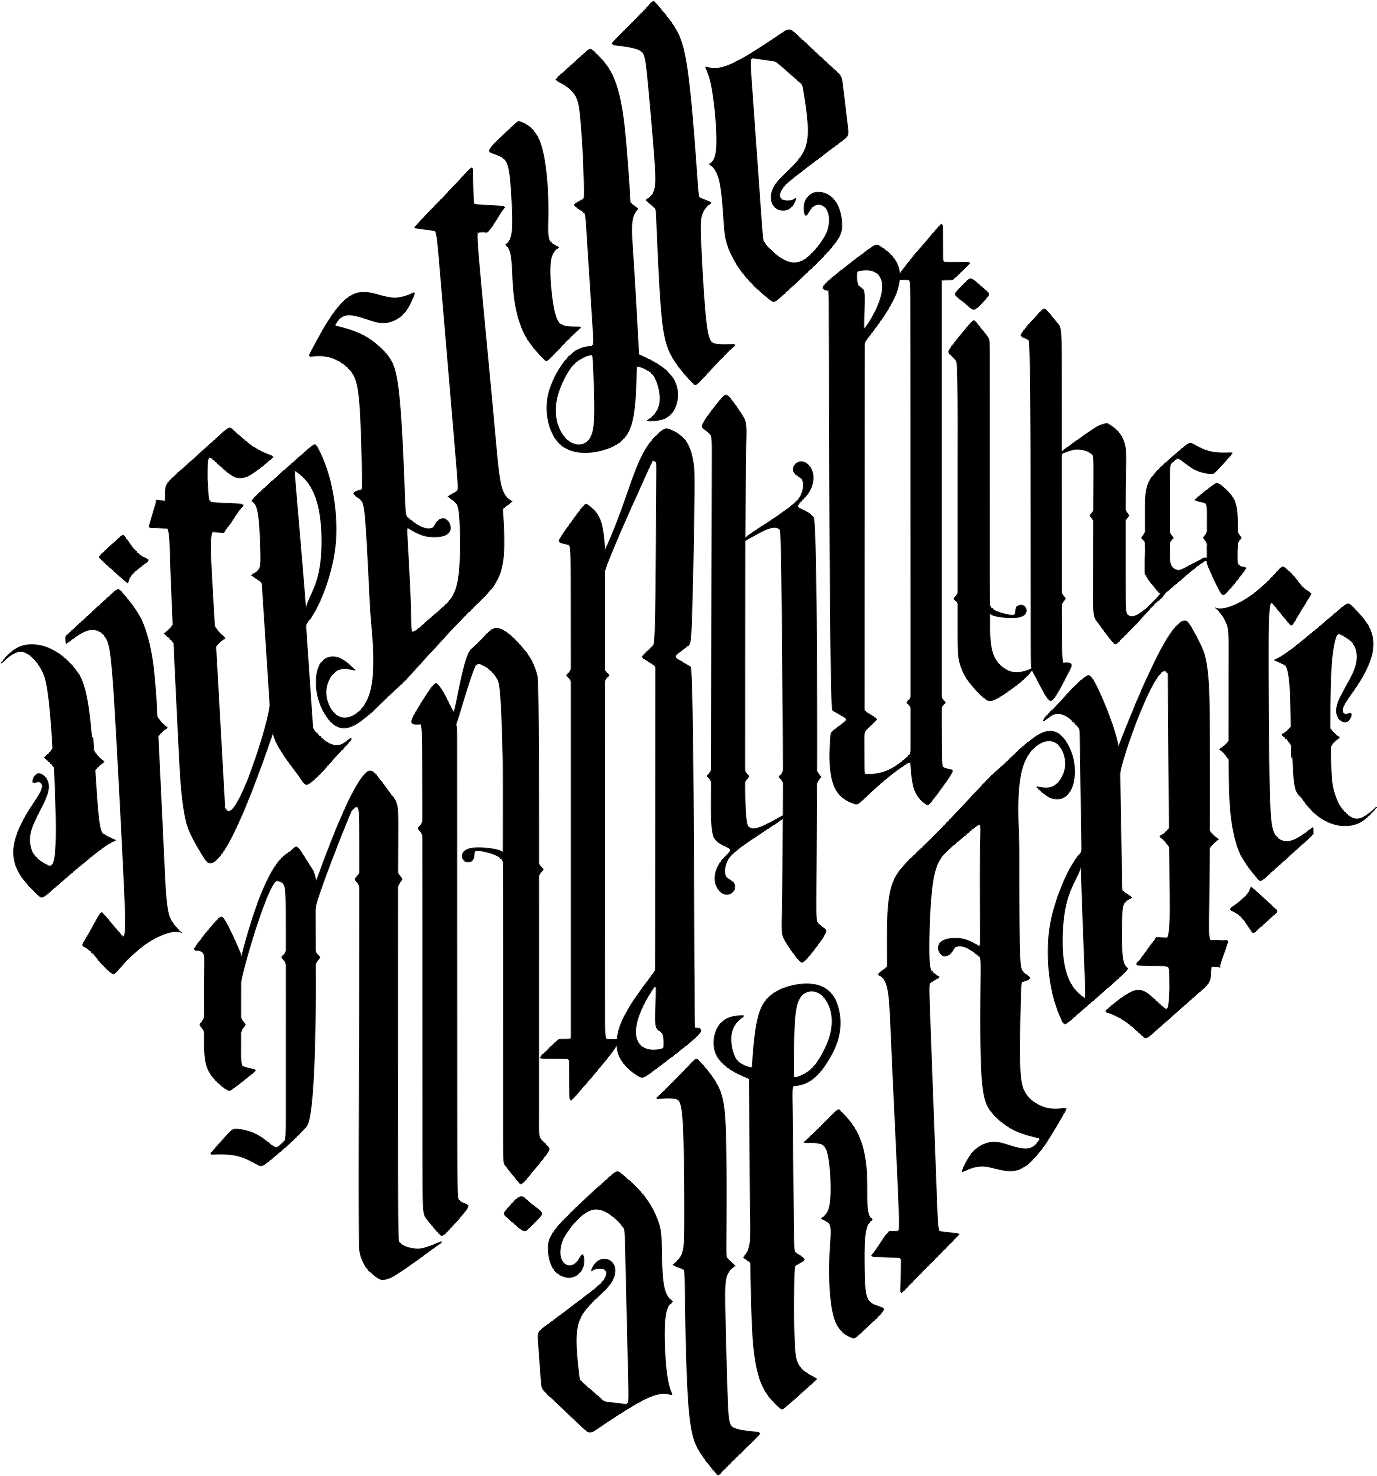 Create diamond shape ambigram for printing or tattoos by Sirokejejian |  Fiverr